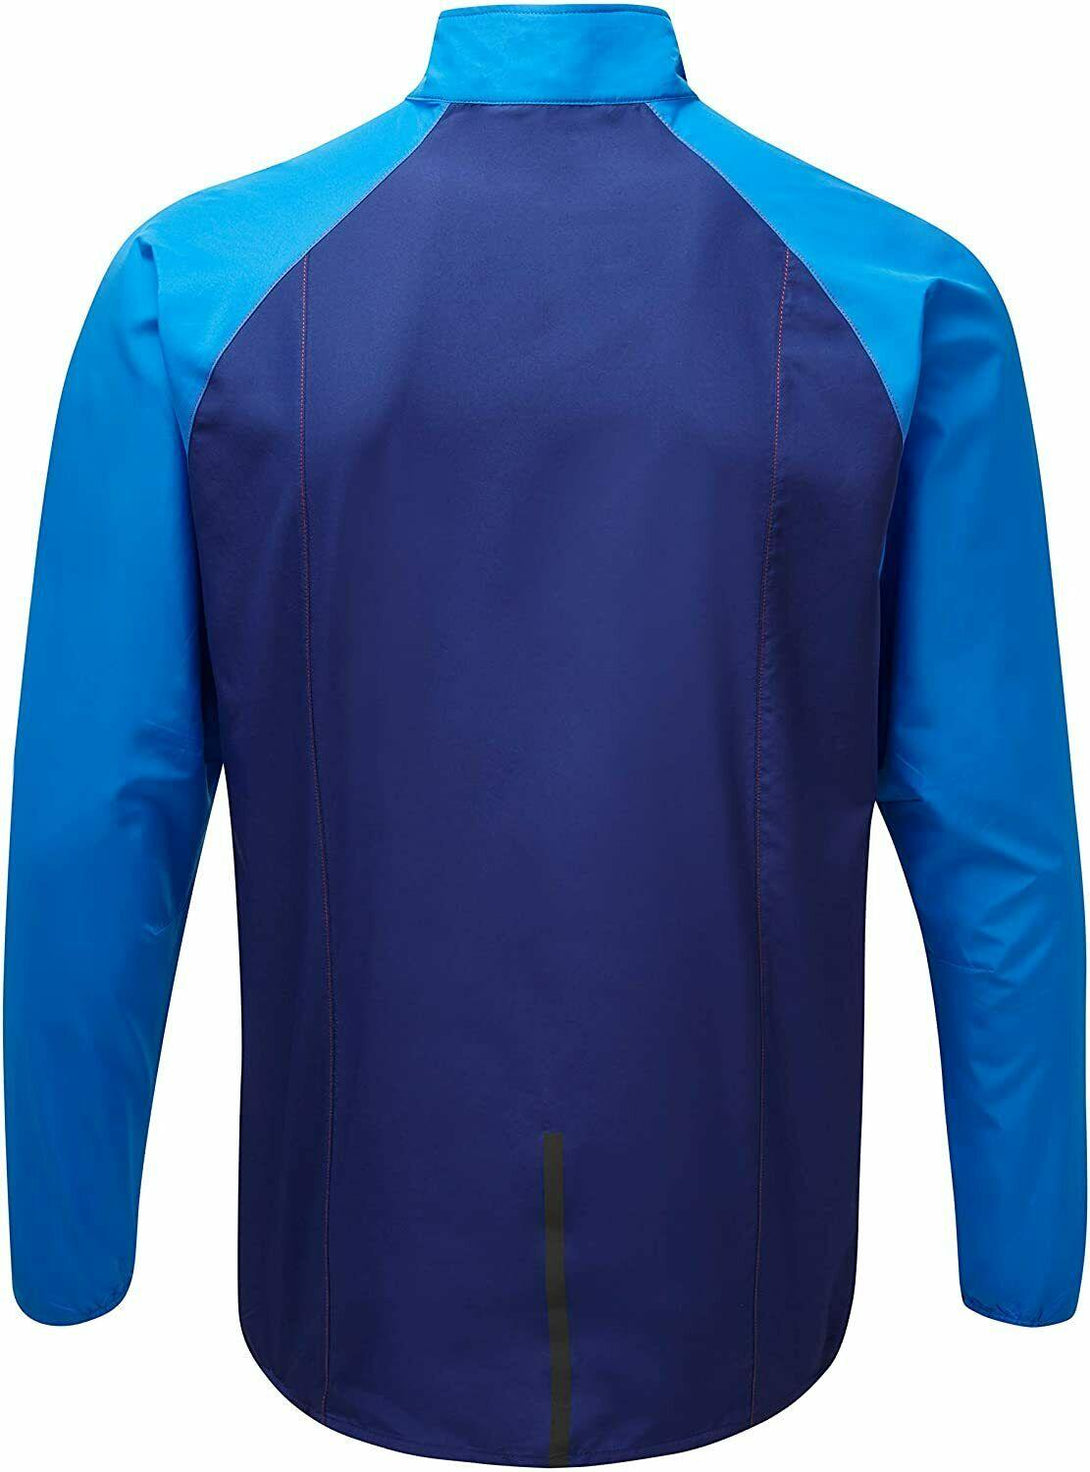 Ronhill Stride Windspeed Men's Jacket